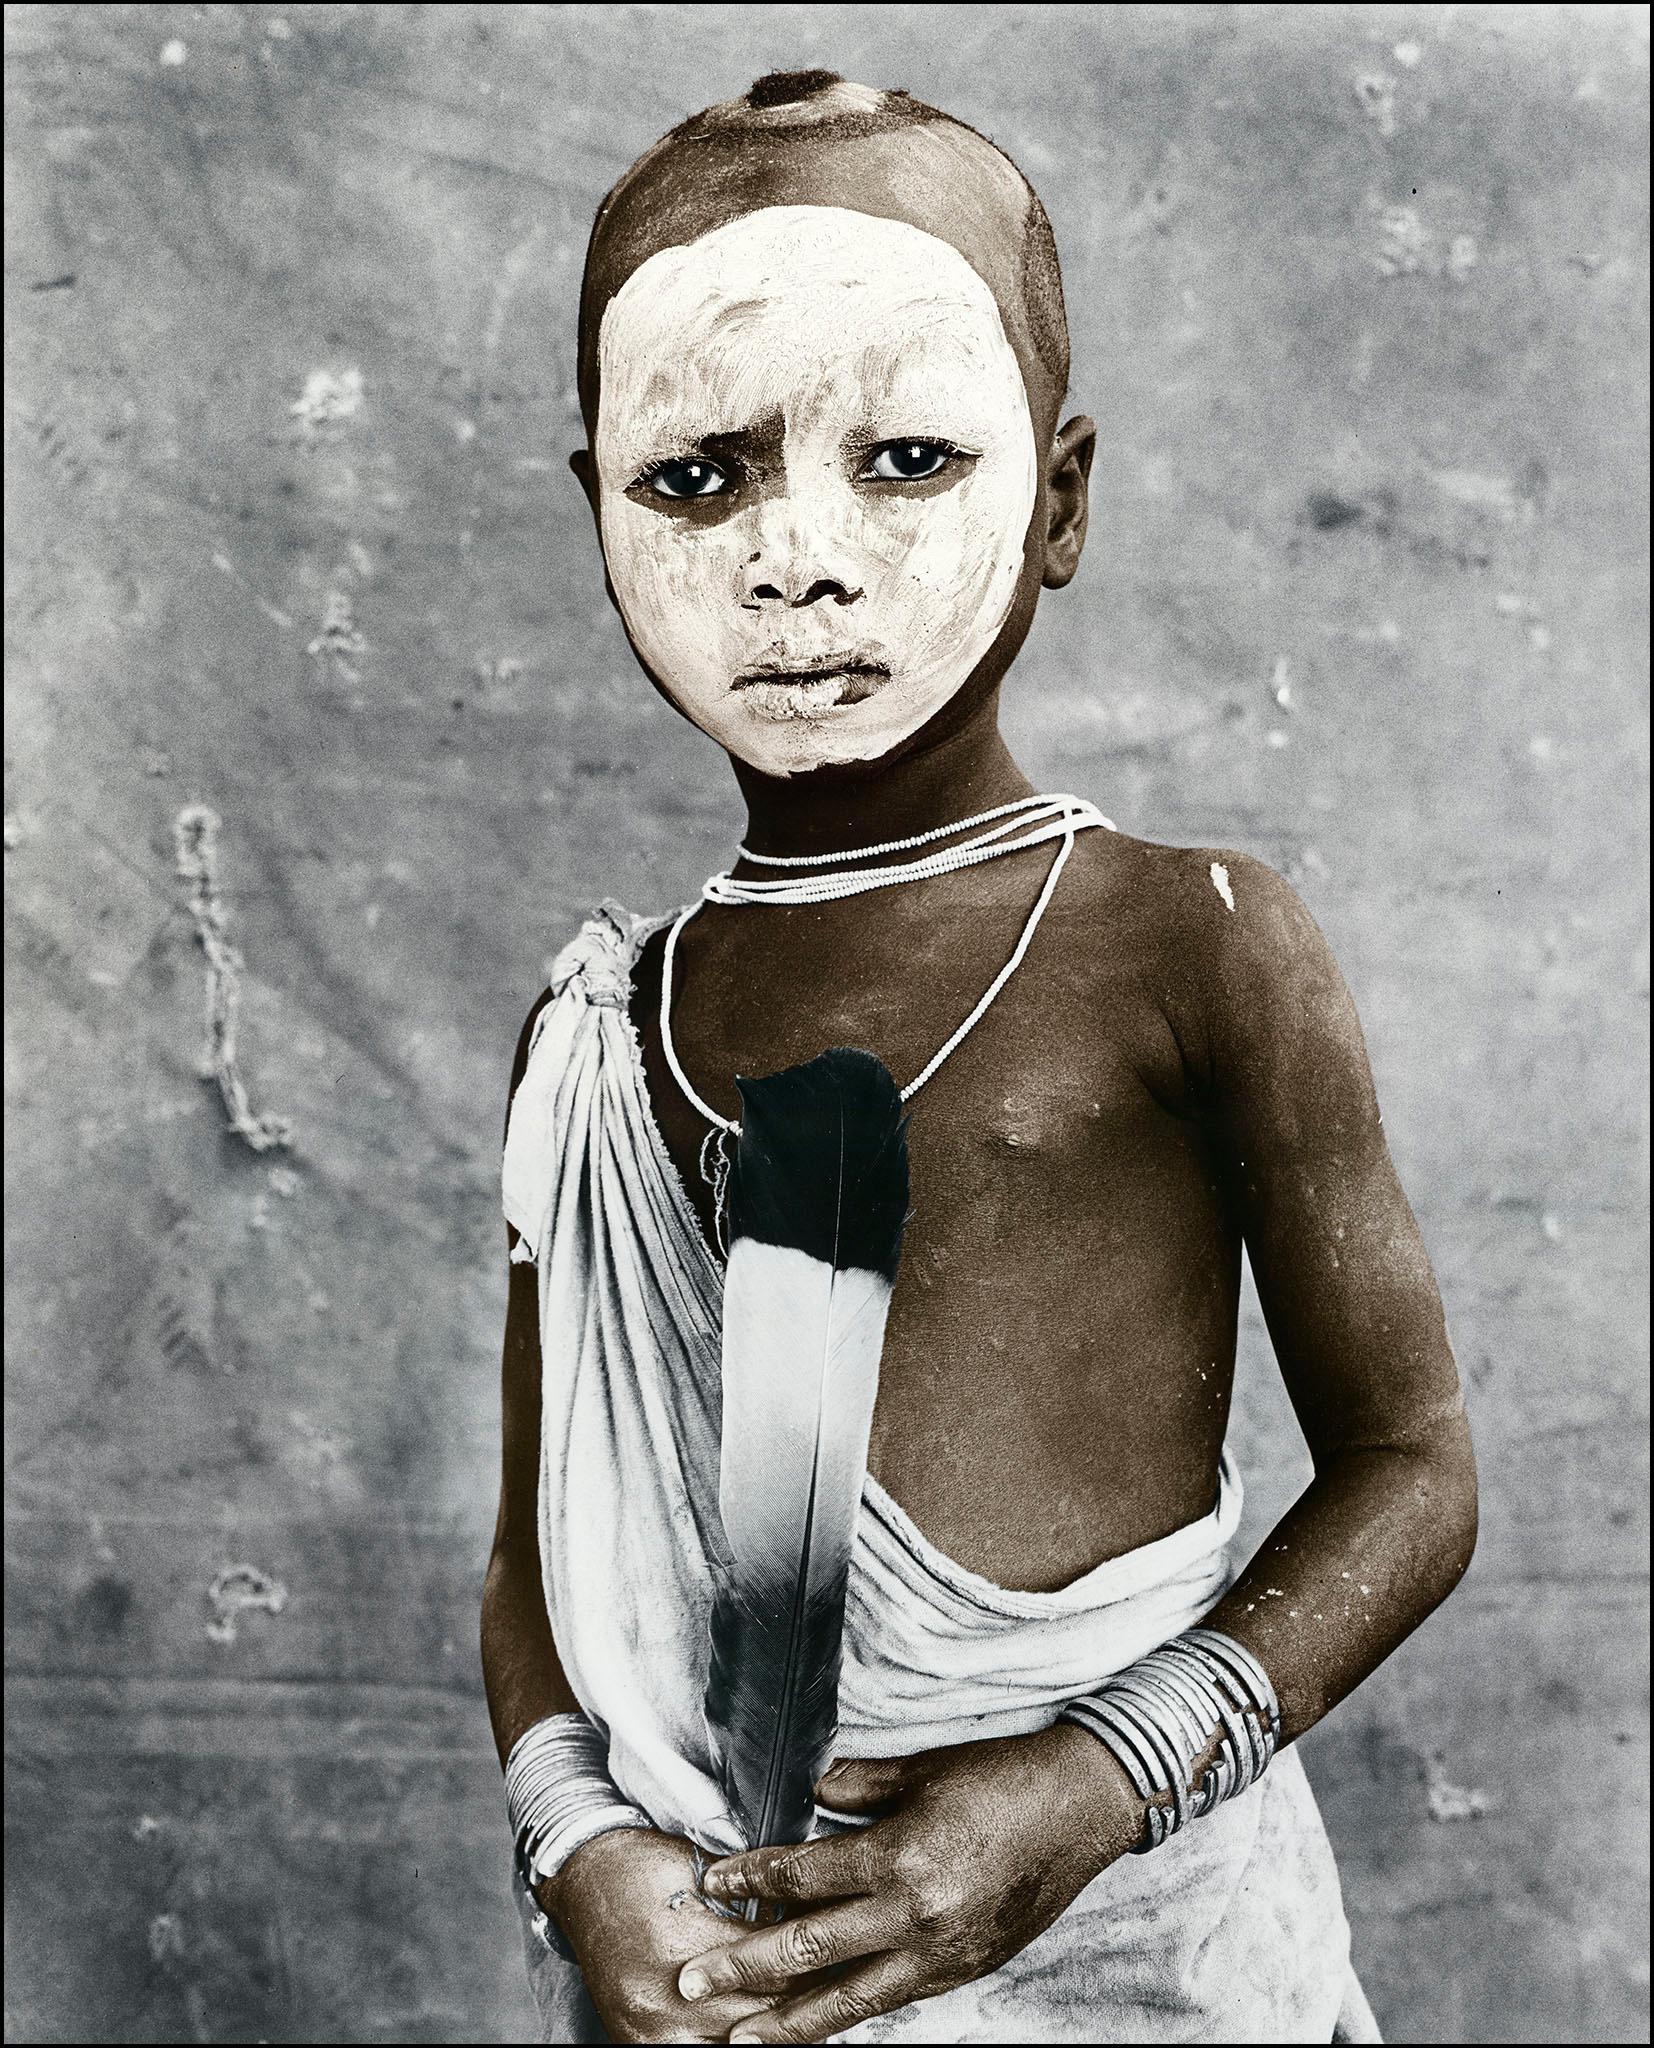 Jan C. Schlegel Portrait Photograph - Olekibo, Suri, Ethiopia, Silver Gelatine, Photography, Contemporary